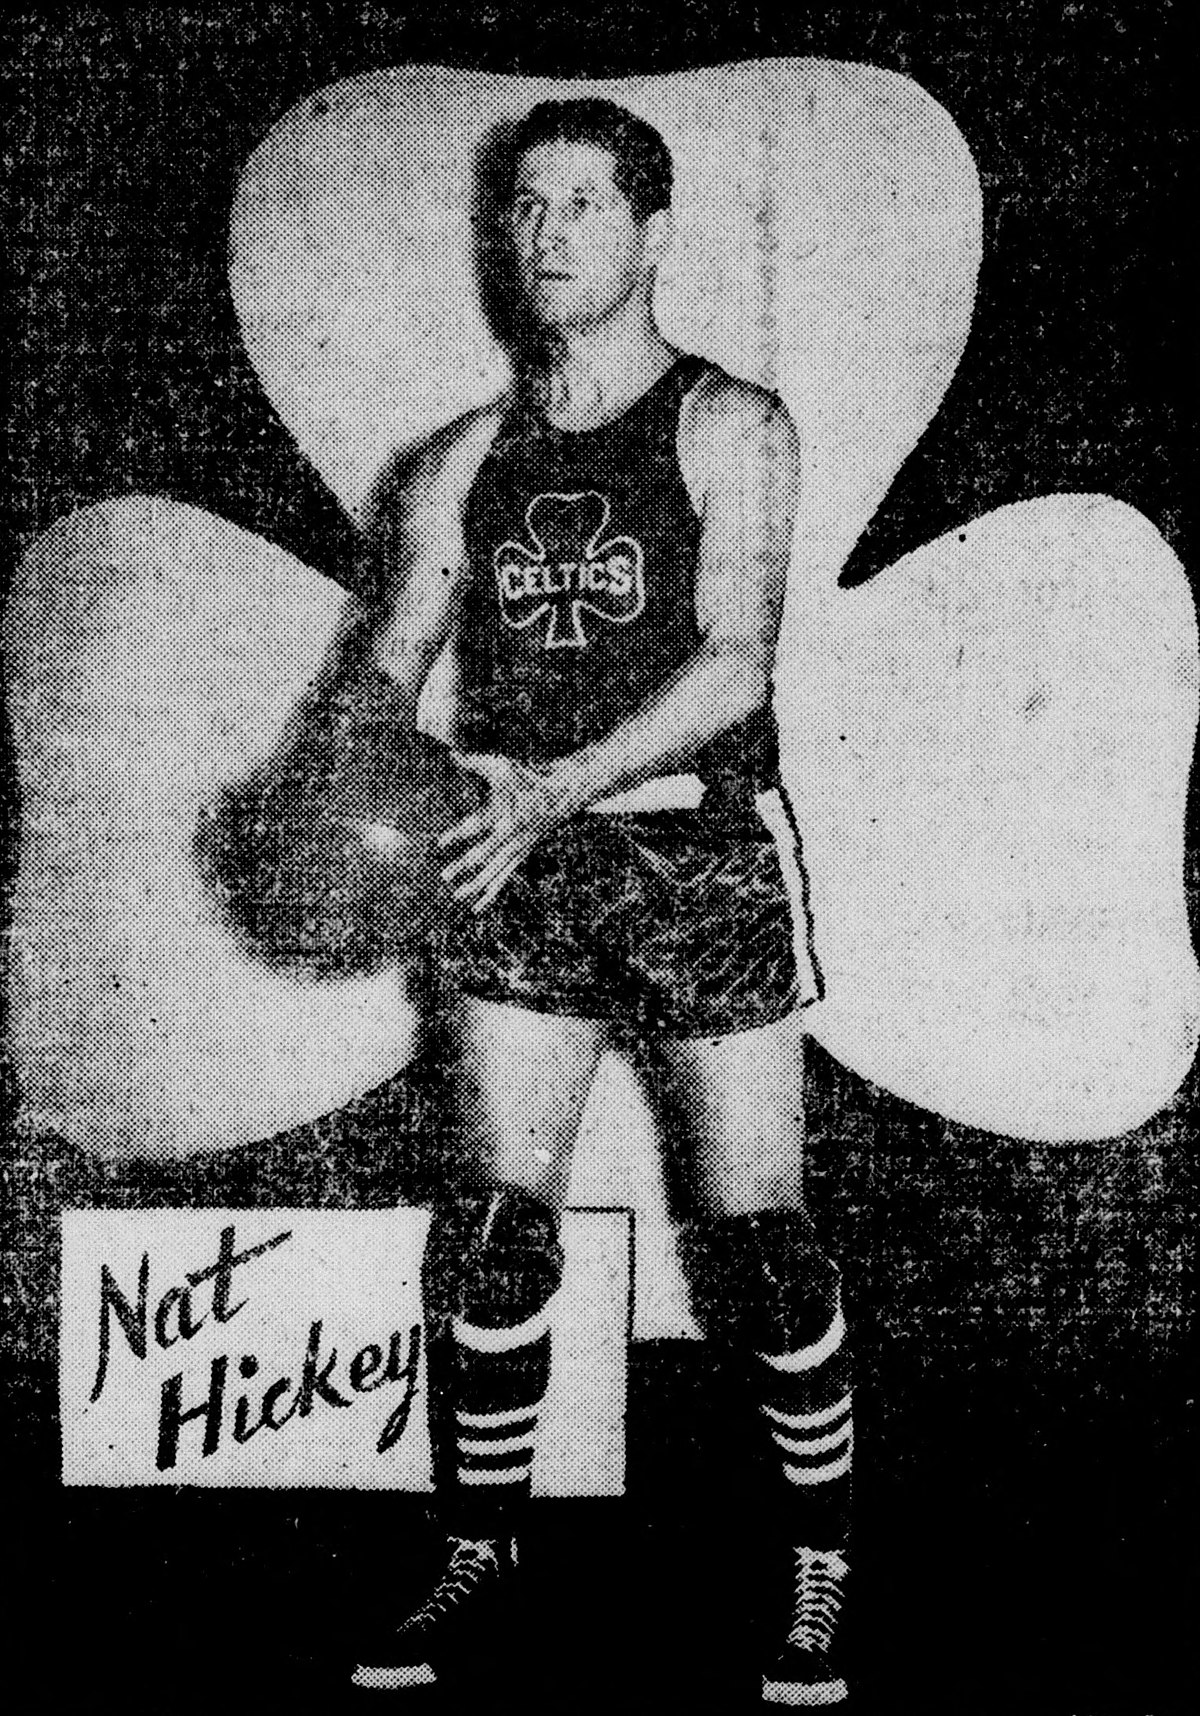 Nicholas J. Hickey during NBA championship 